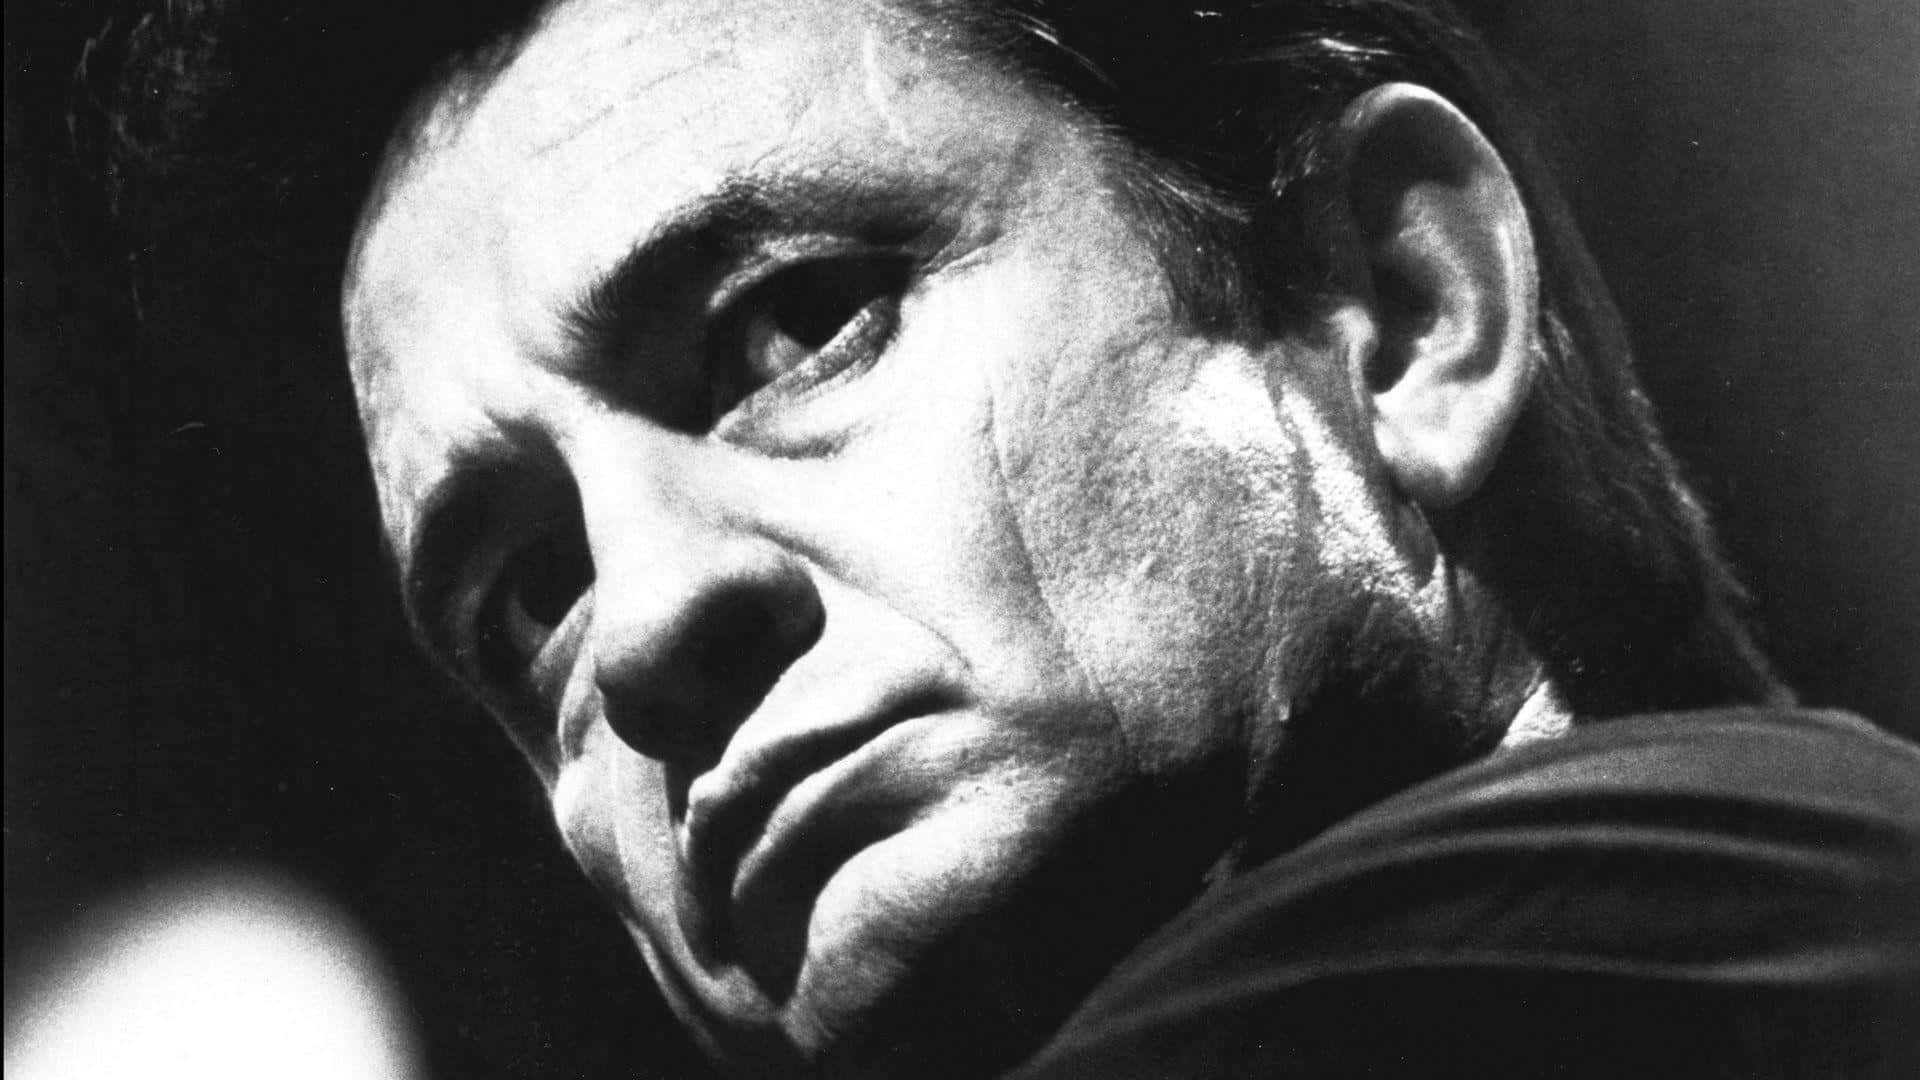 The Legendary Johnny Cash